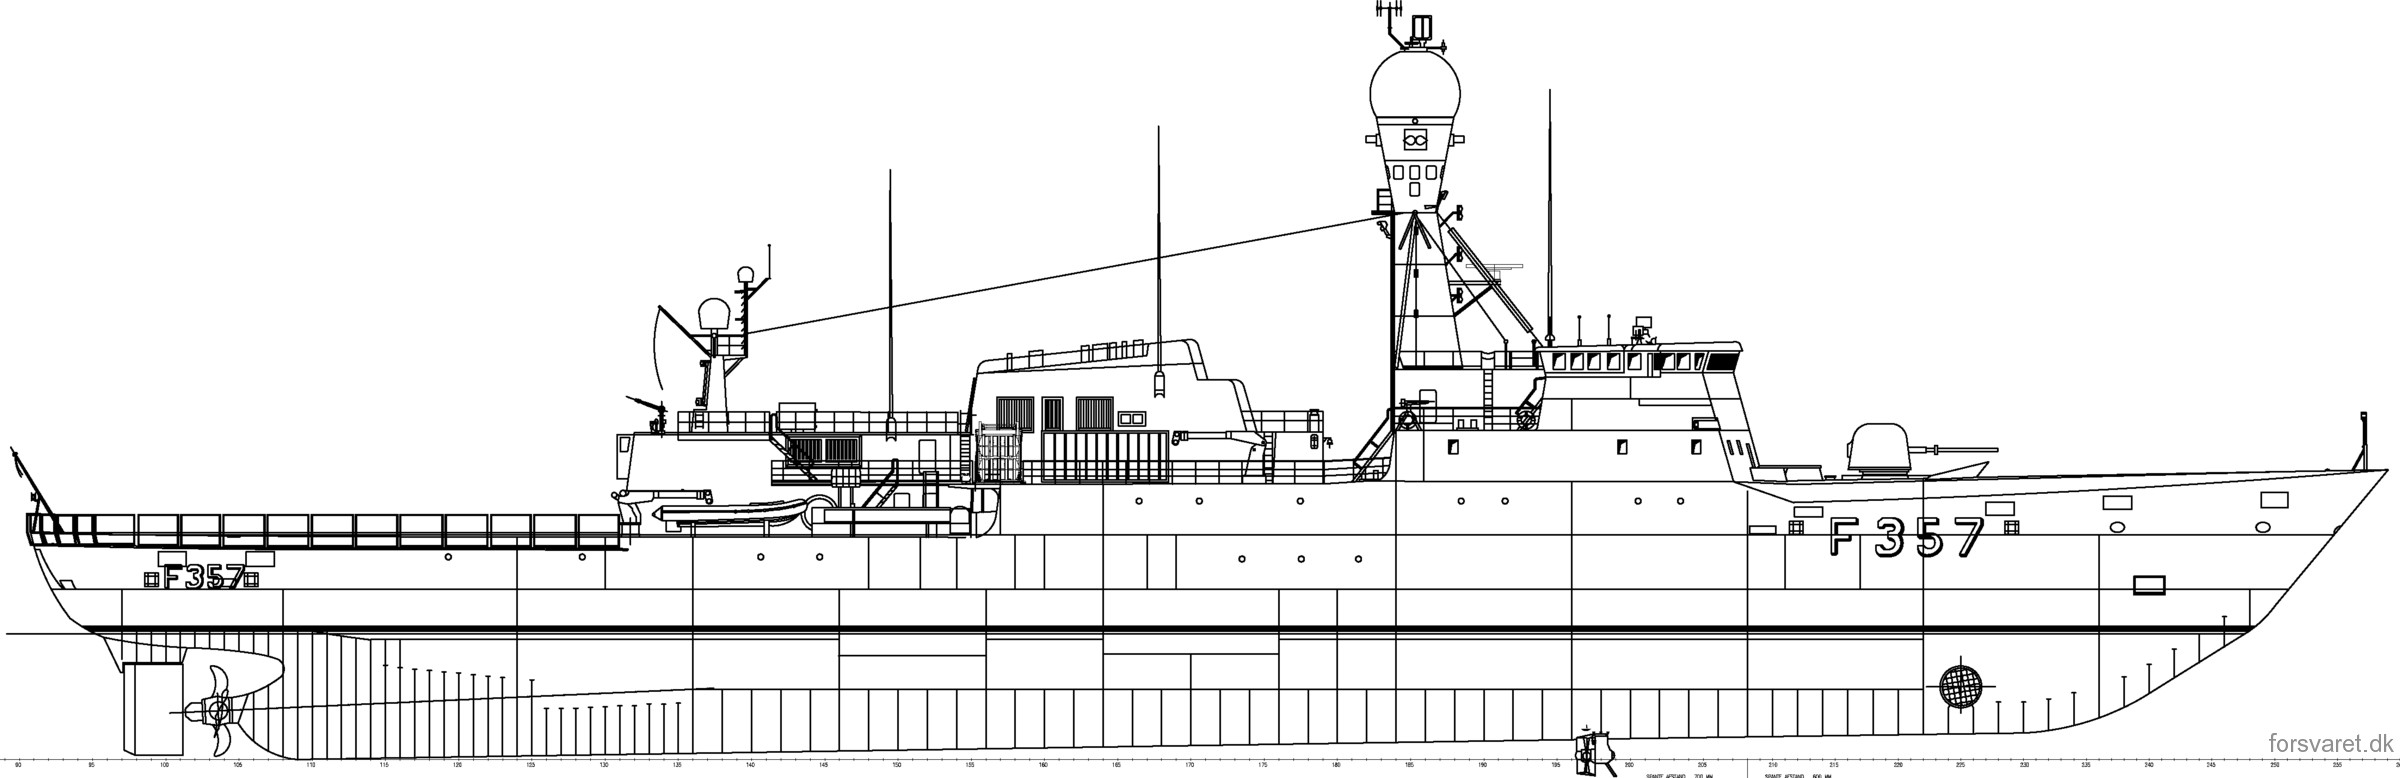 thetis class ocean patrol frigate royal danish navy kongelige danske marine kdm inspektionsskibet 03